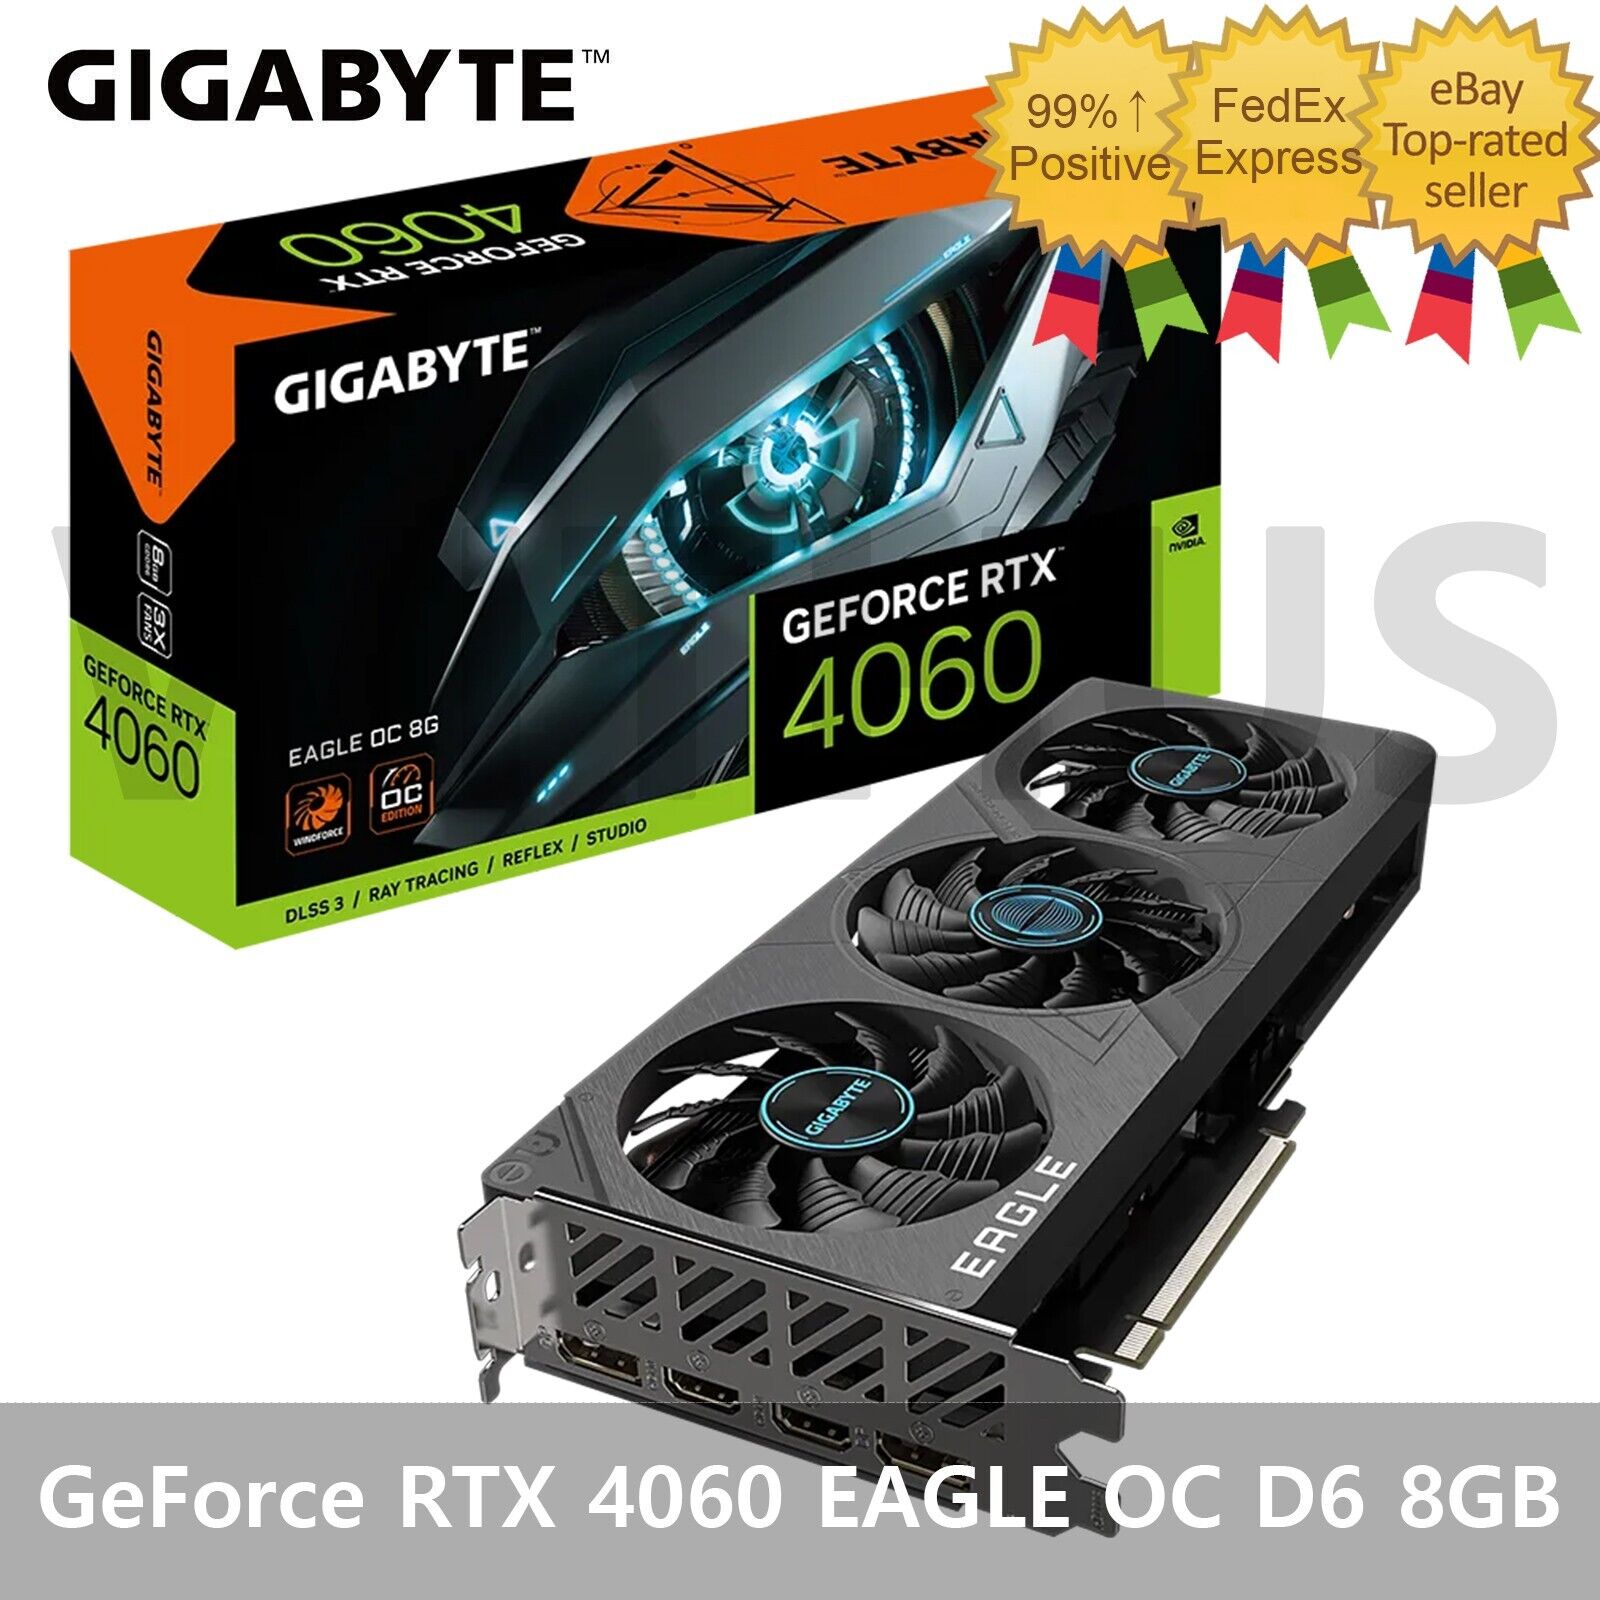 GIGABYTE NVIDIA GeForce RTX 4060 EAGLE OC D6 8GB Gaming Graphics Card - Tracking